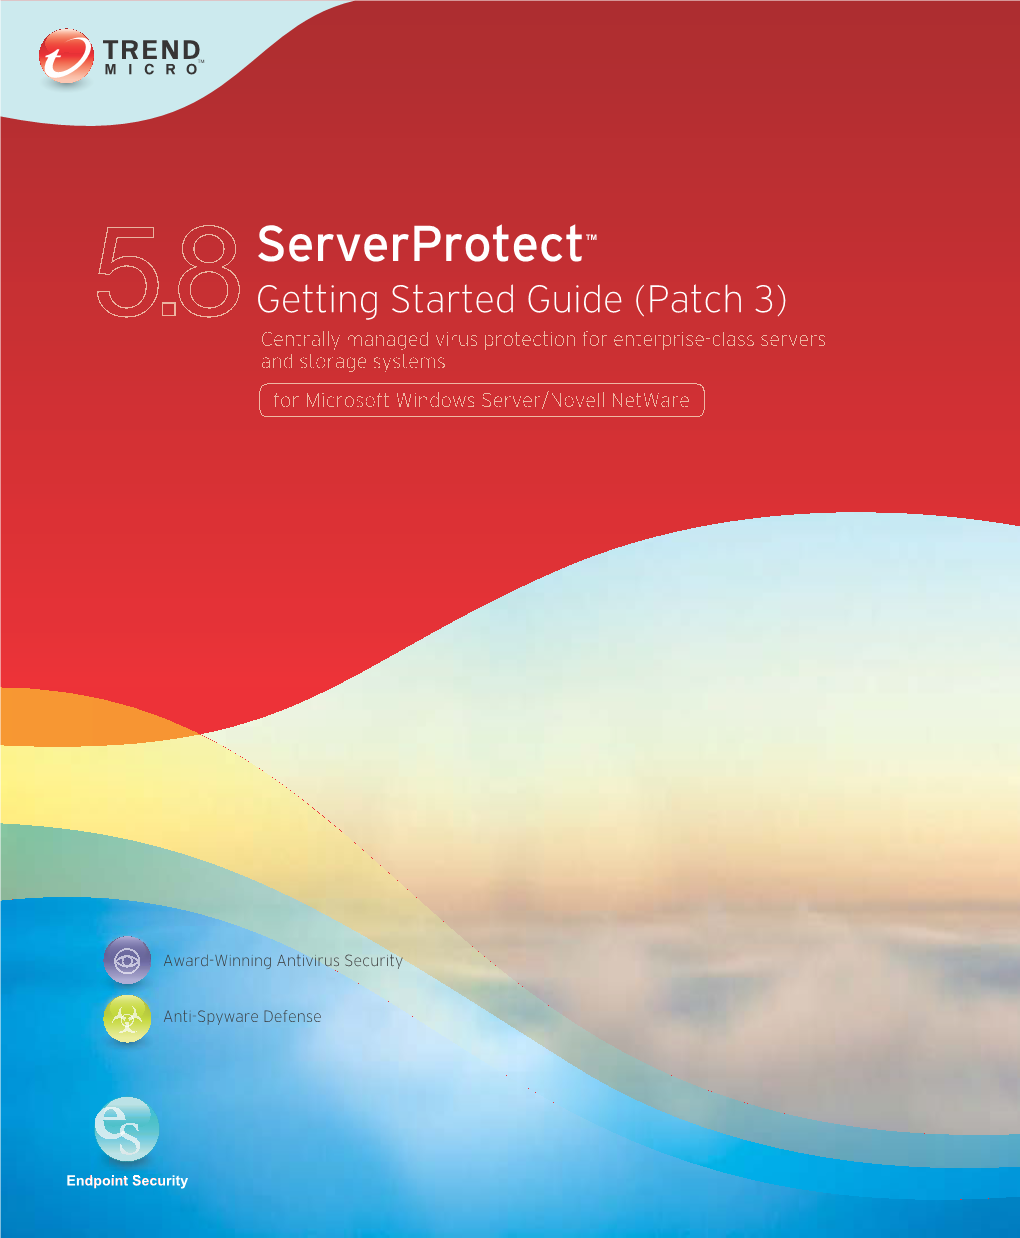 Serverprotect Support for Microsoft Windows Server System